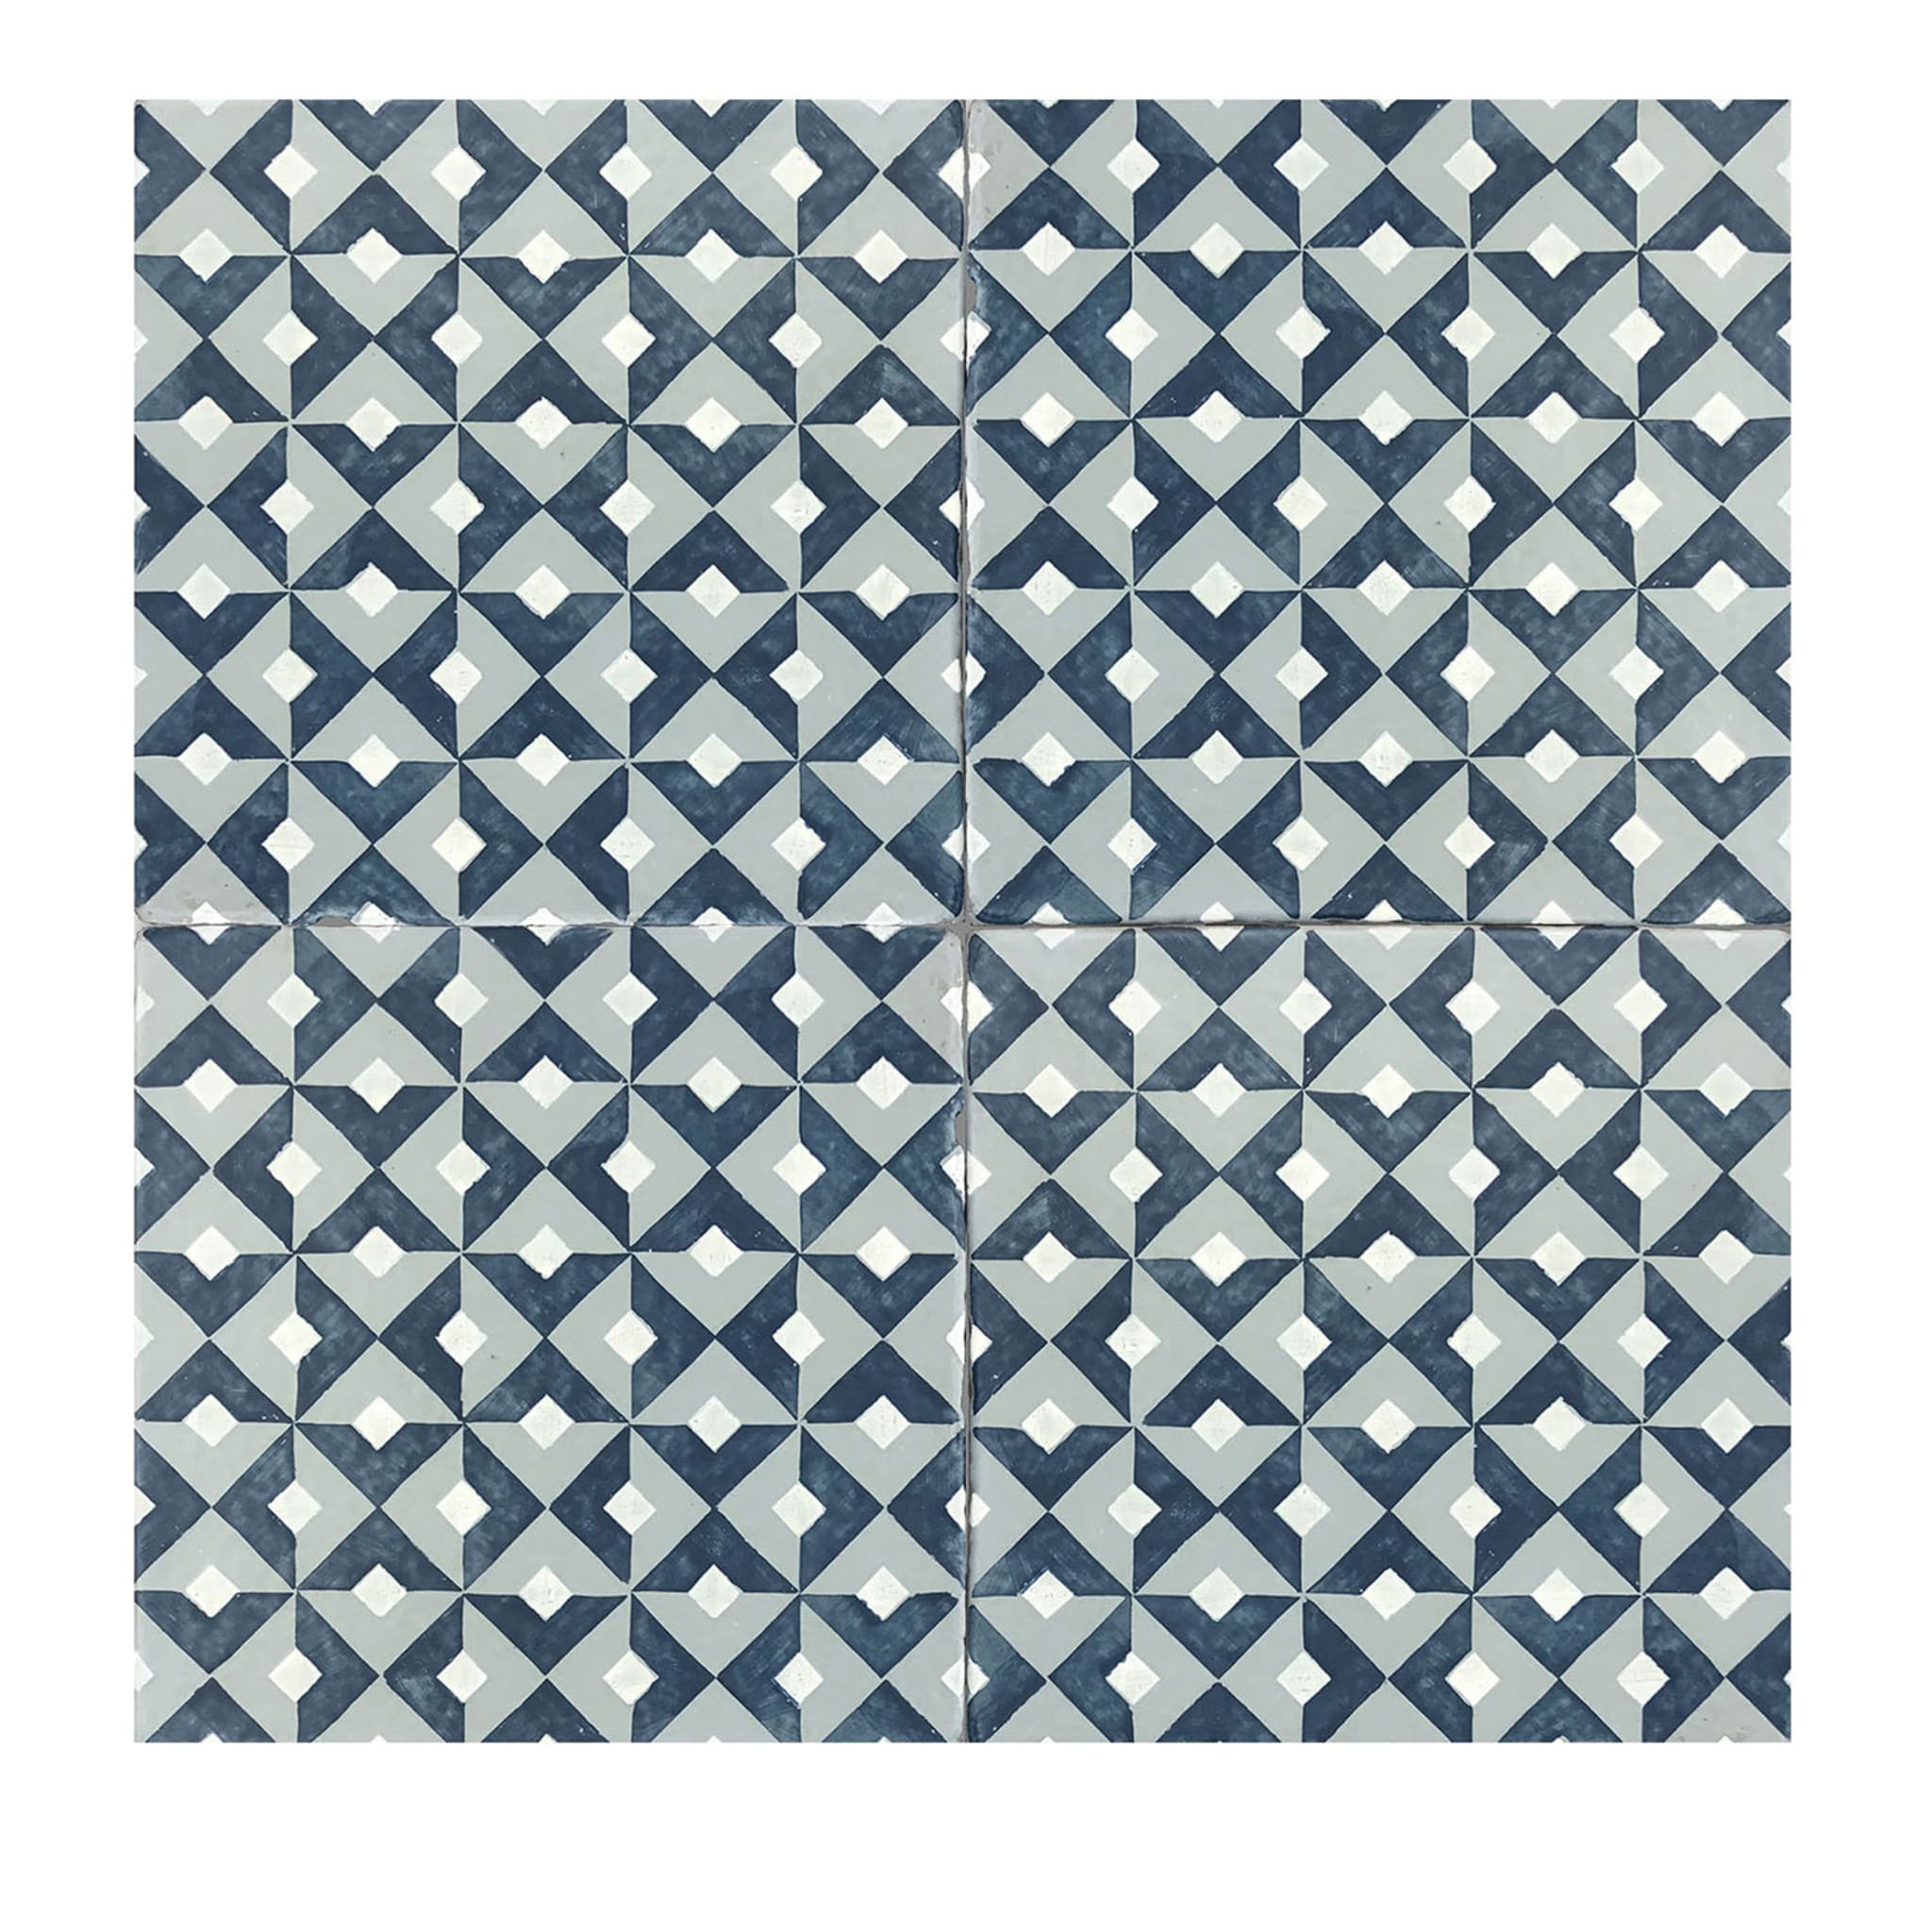 Daamè Set of 25 Square Light-Blue Tiles #1 - Main view